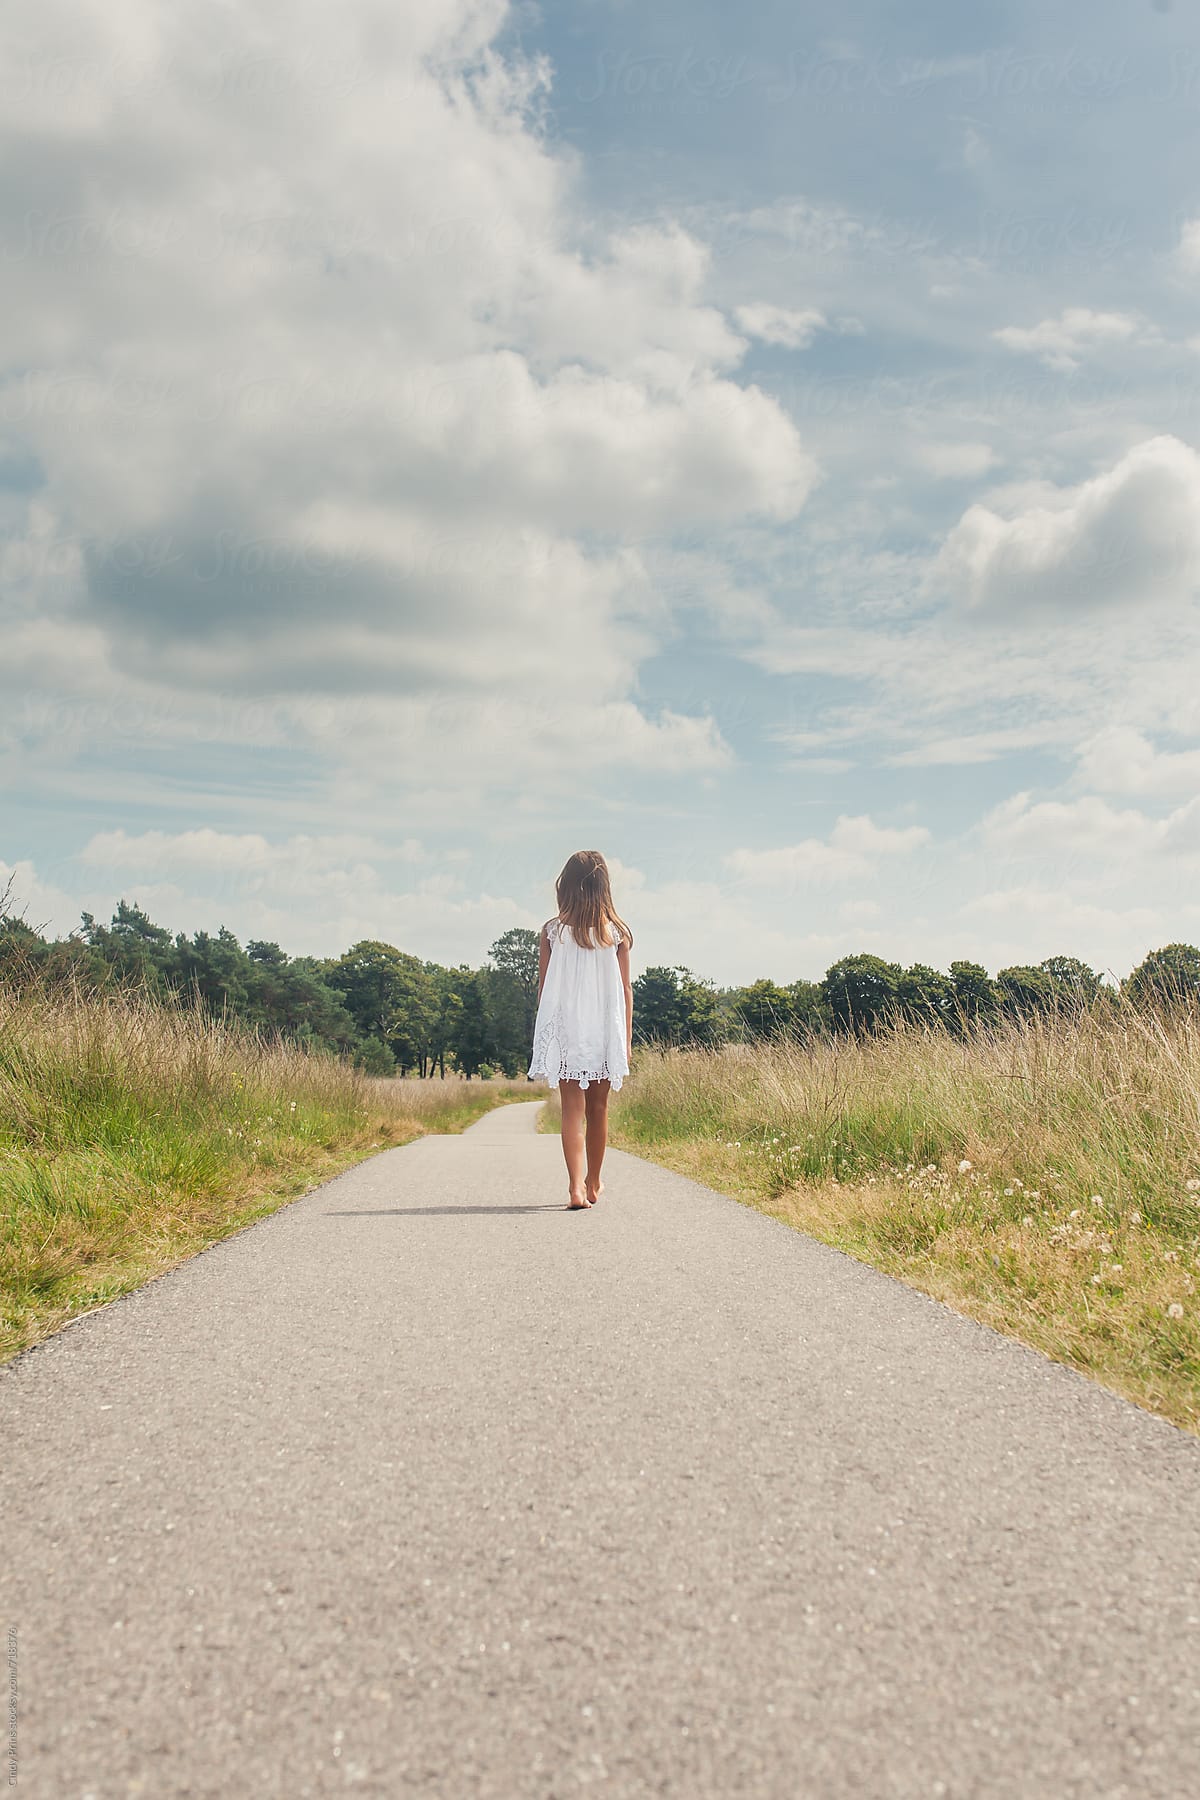 Little girl barefoot in a white dress walking on a long road